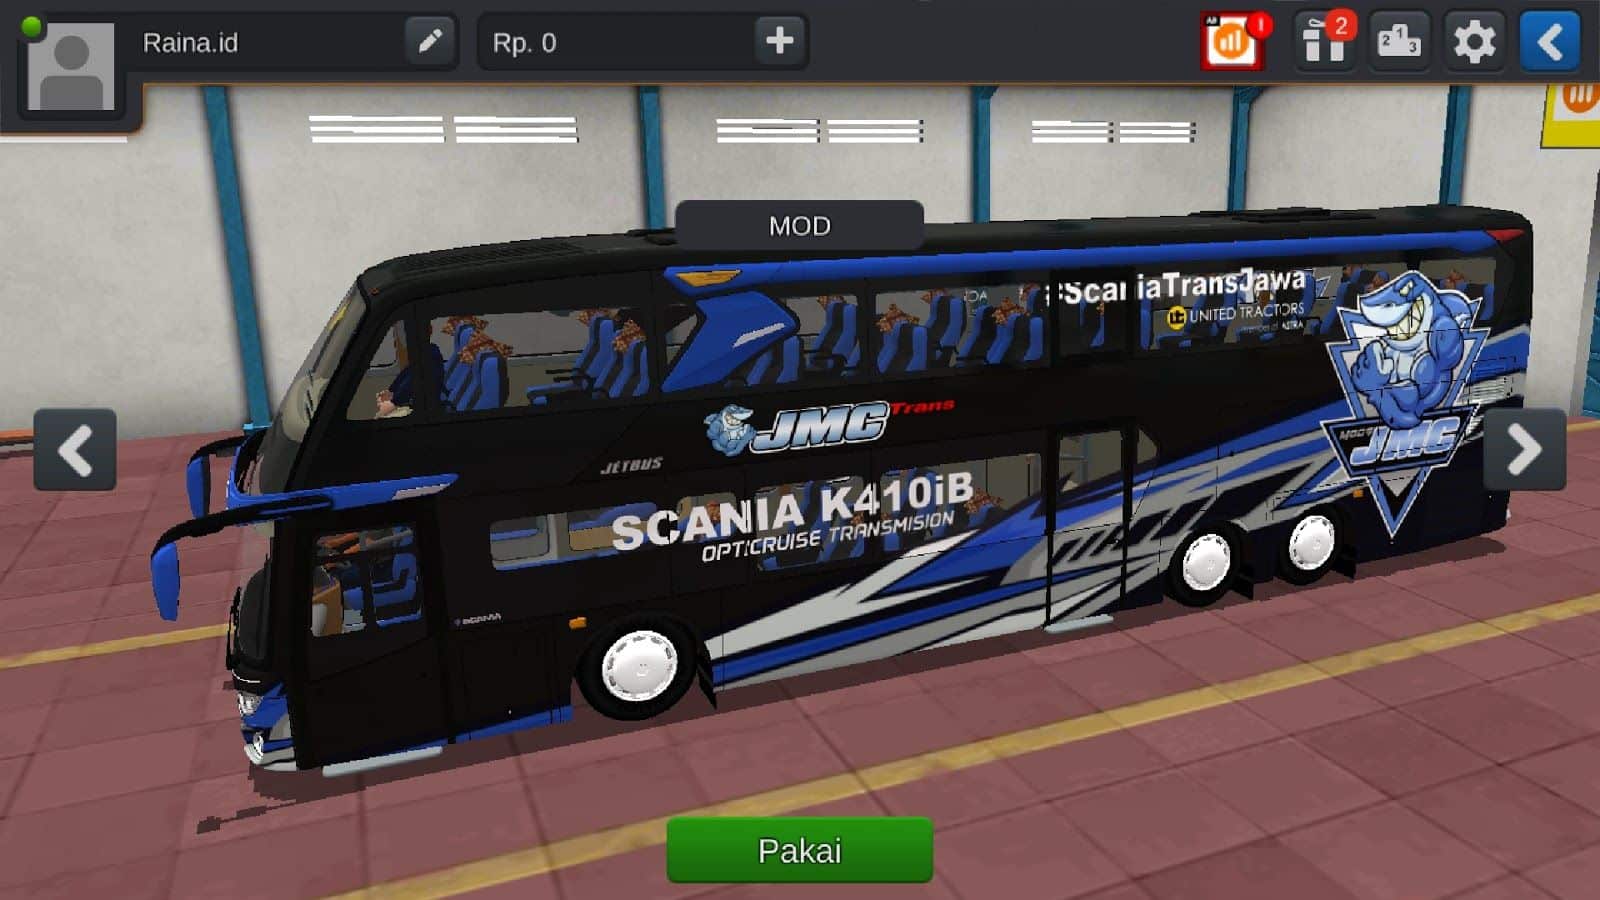 Mod bus simulator